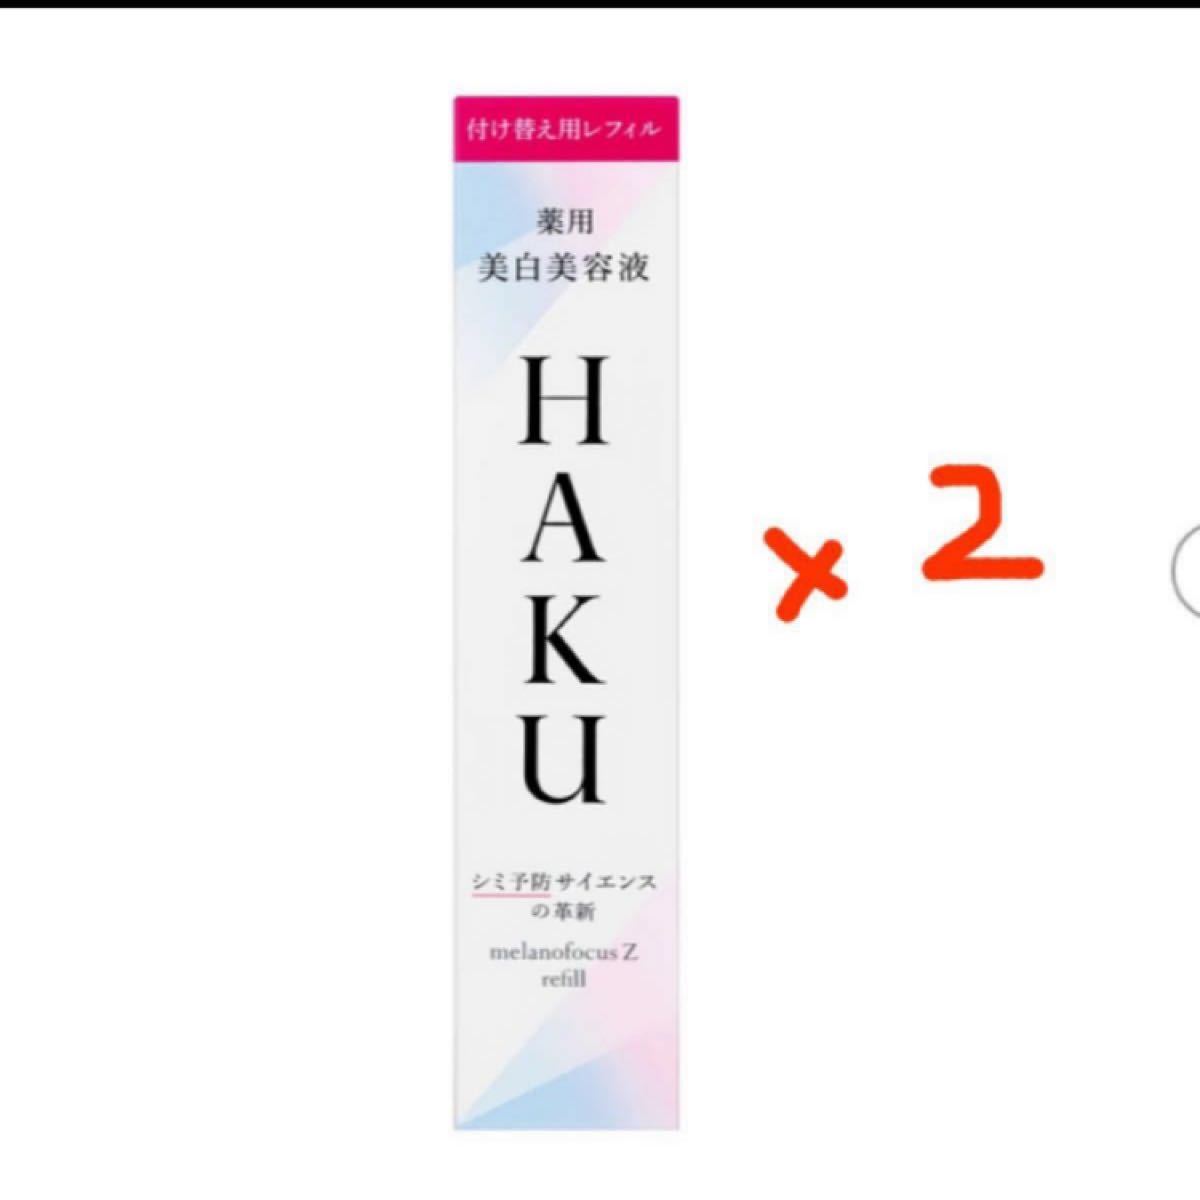 HAKU メラノフォーカスＺ 45g(レフィル)×2個セット‼️ umbandung.ac.id